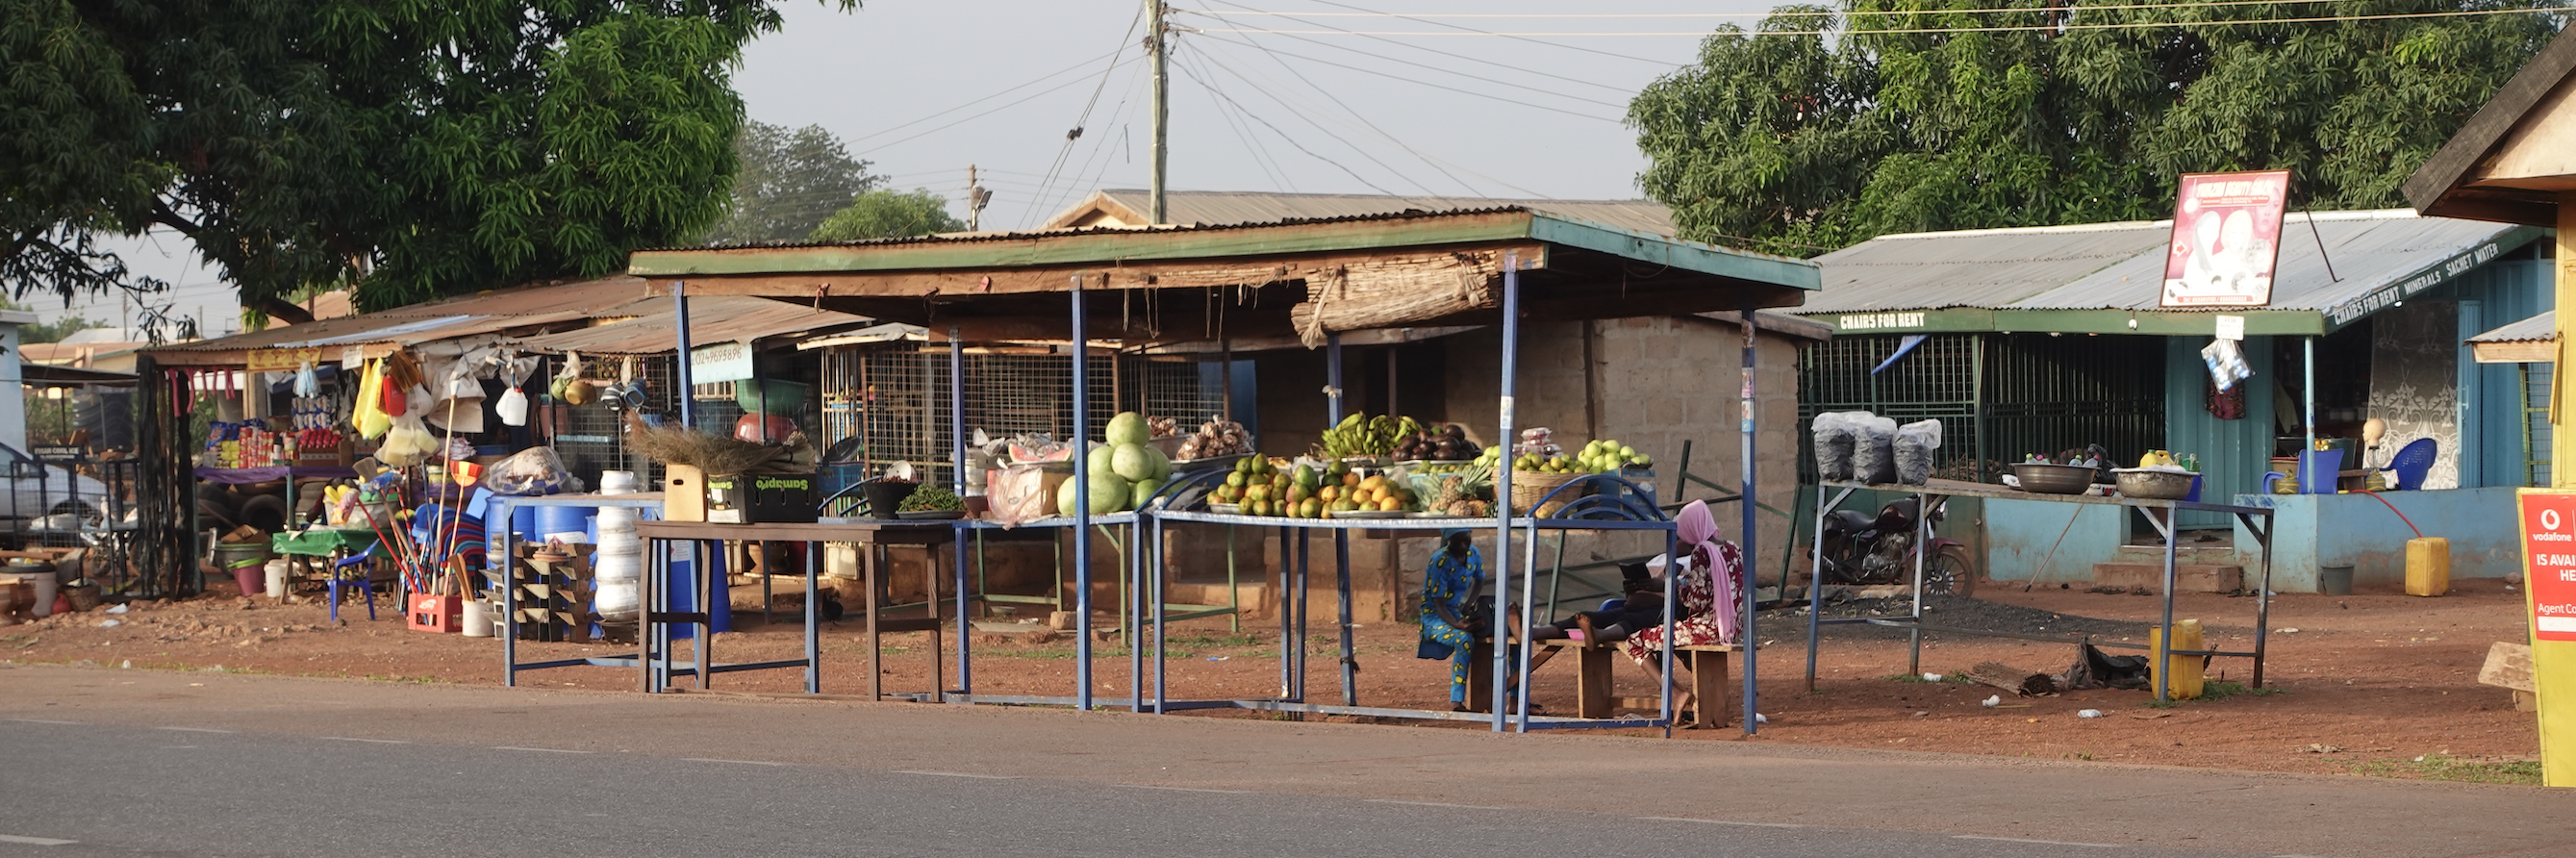 Photo of a Market in Ghana